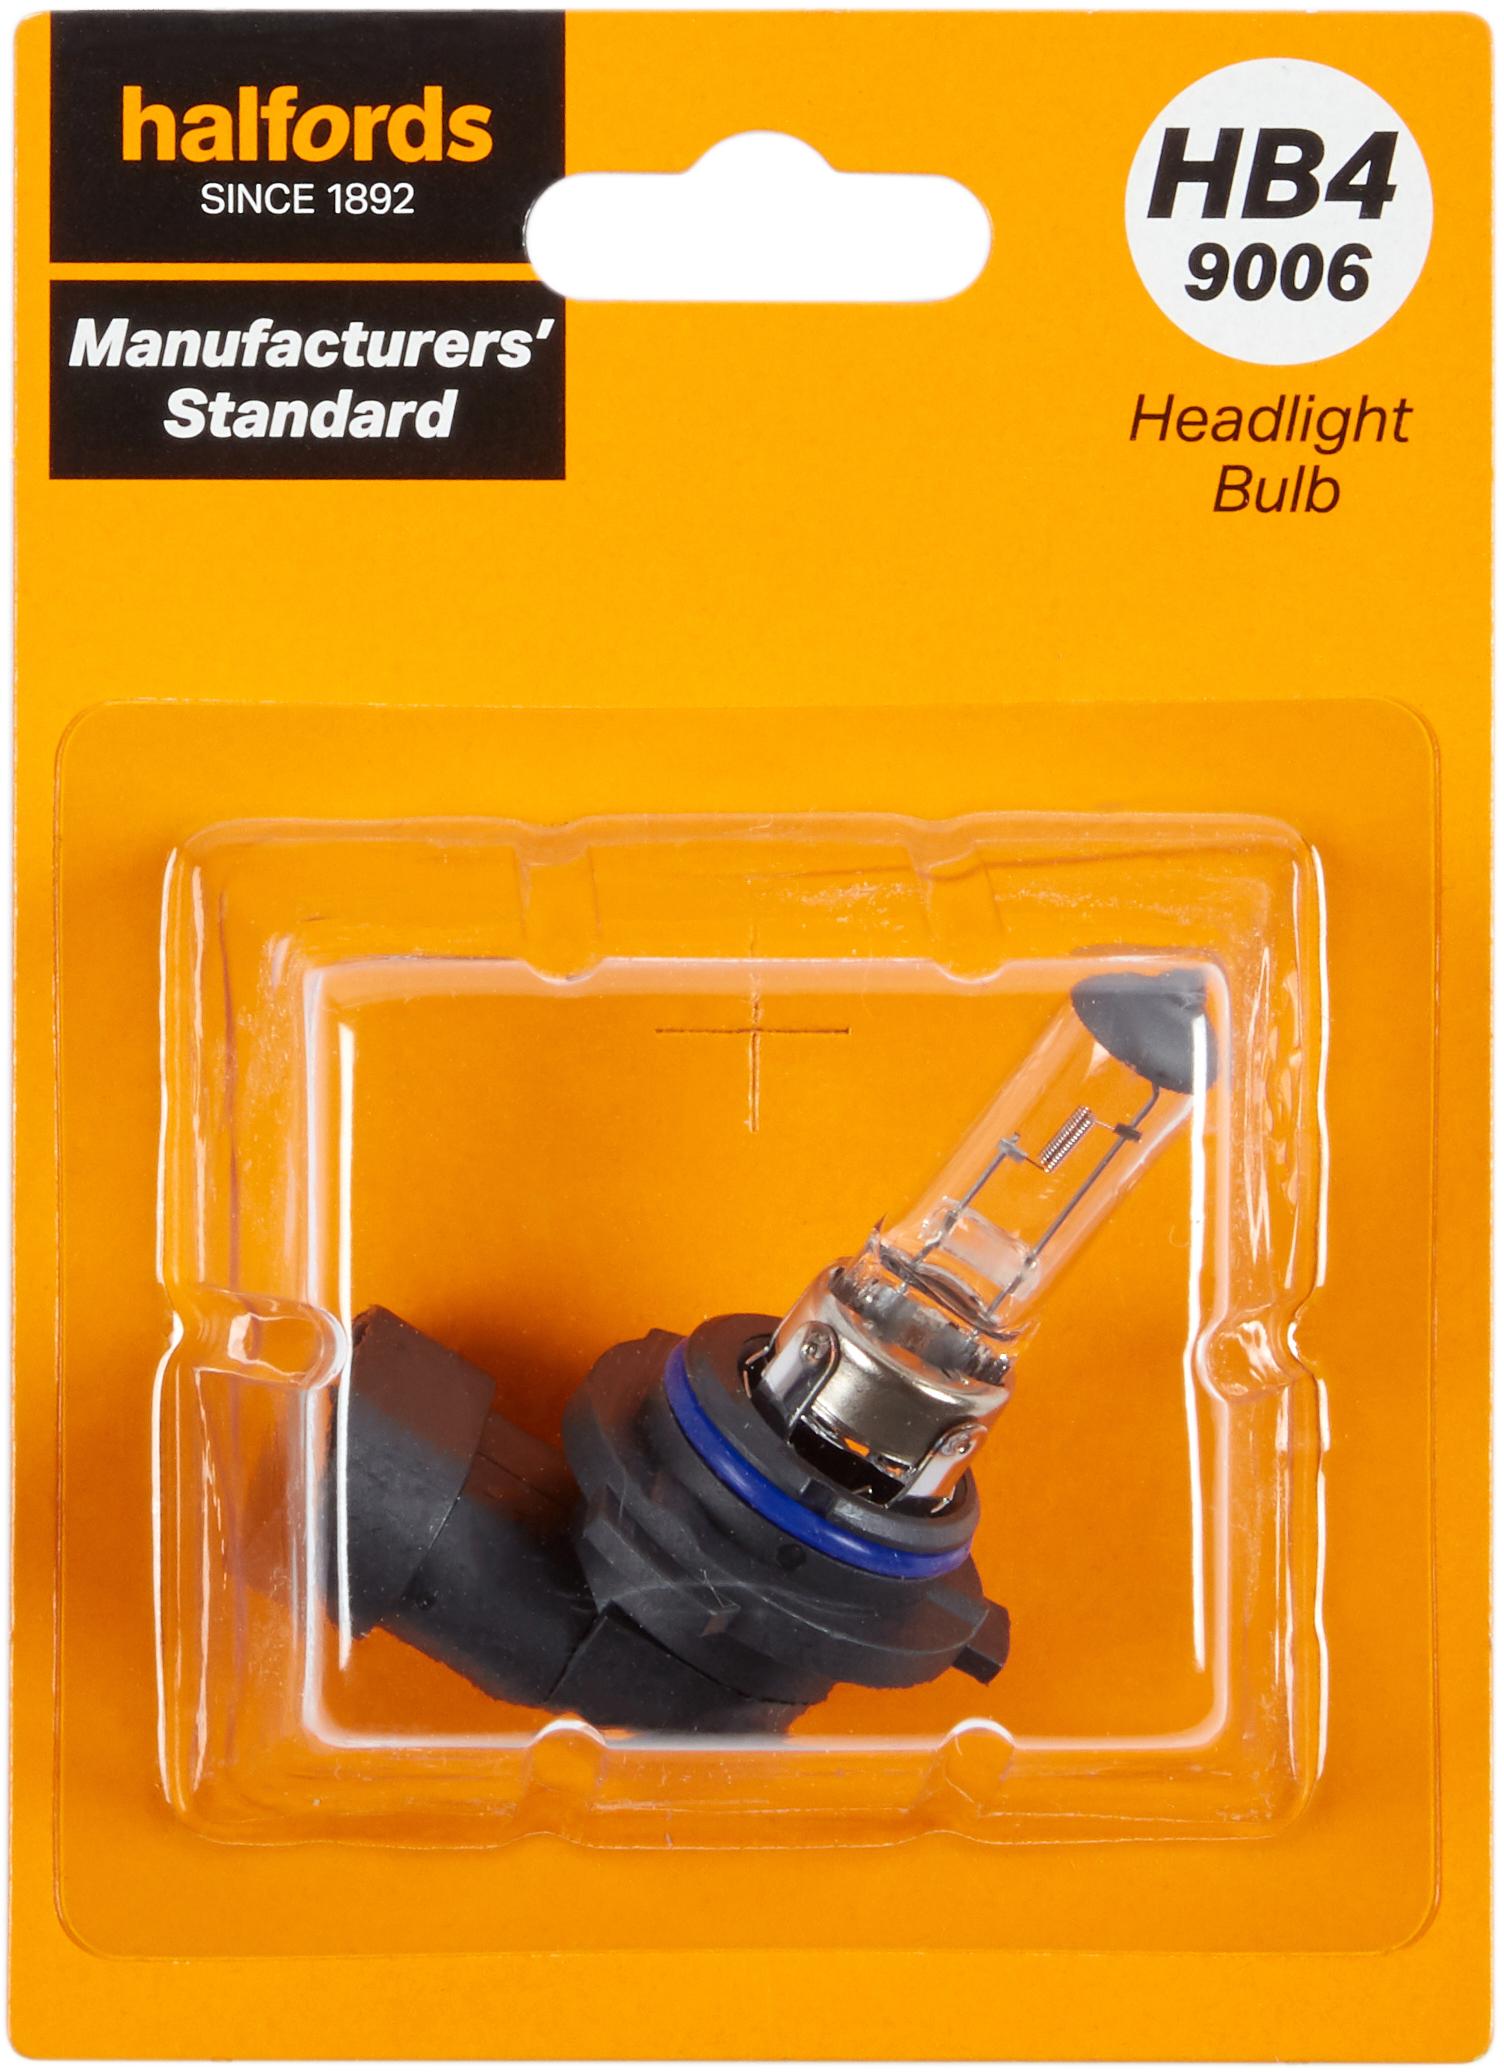 Hb4 9006 Car Headlight Bulb Manufacturers Standard Halfords Single Pack